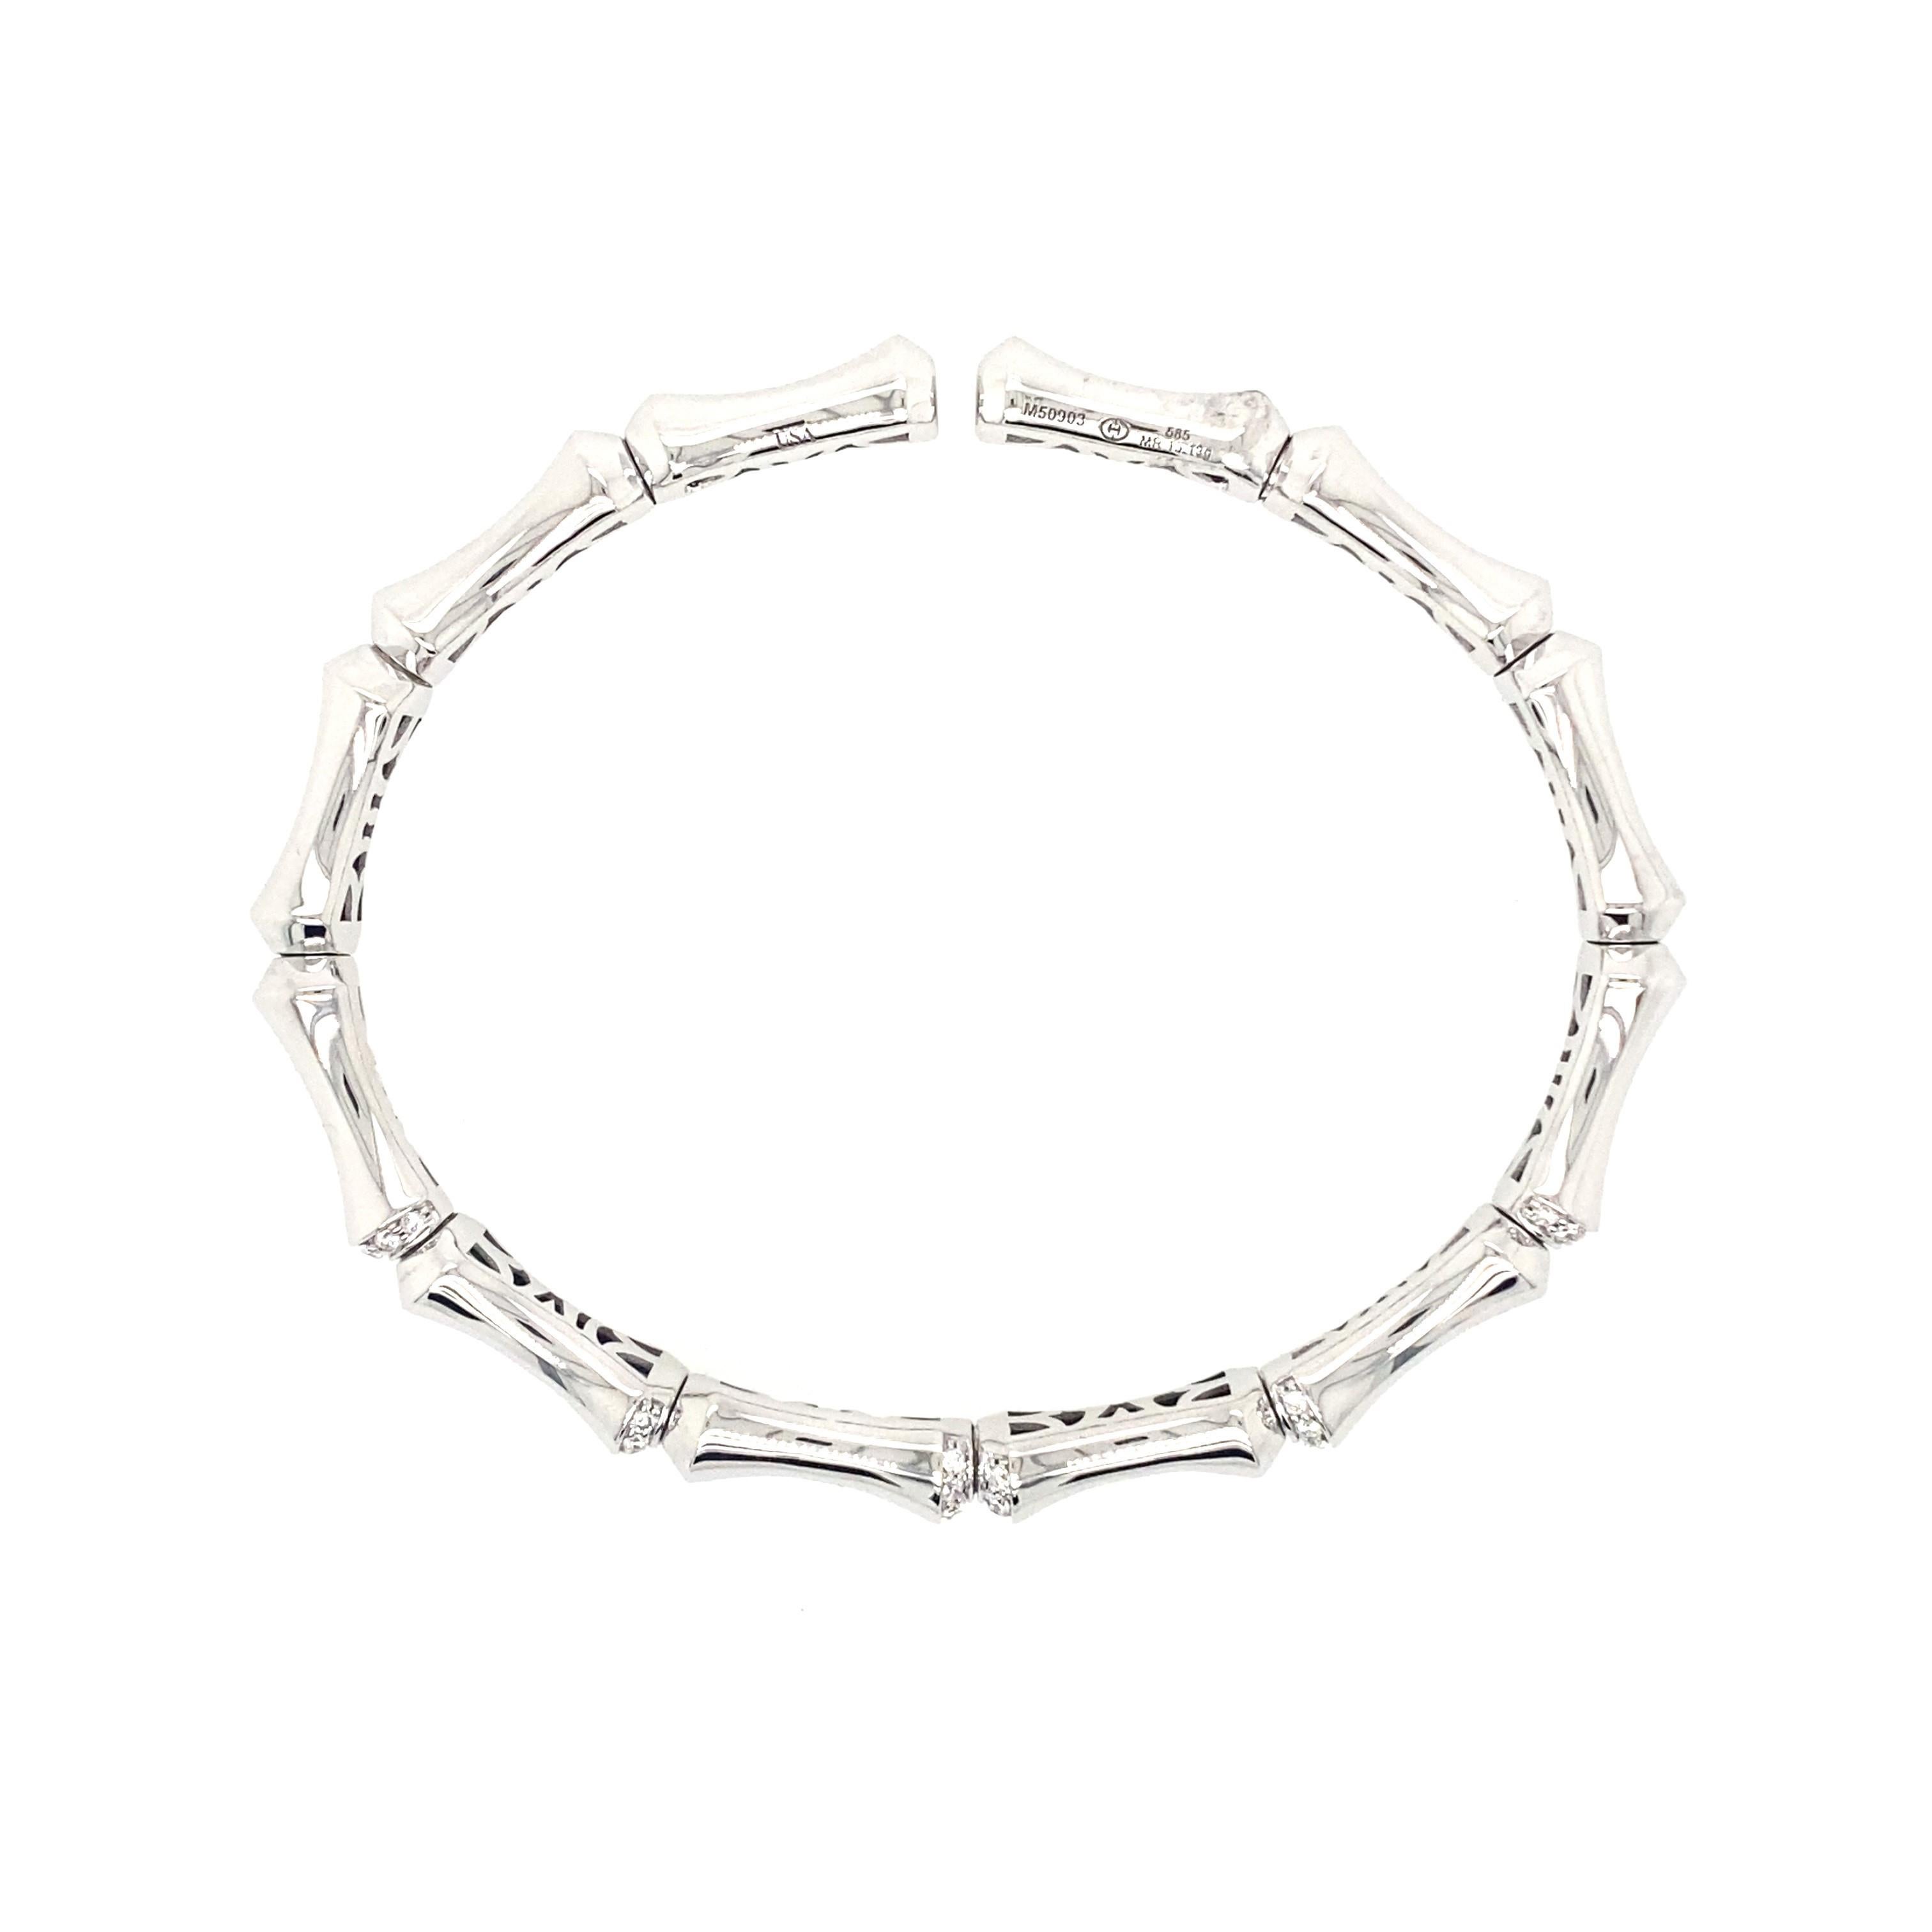 14 karat white gold memory cuff bracelet with five L'amour Crisscut diamonds 0.85 carats total weight.